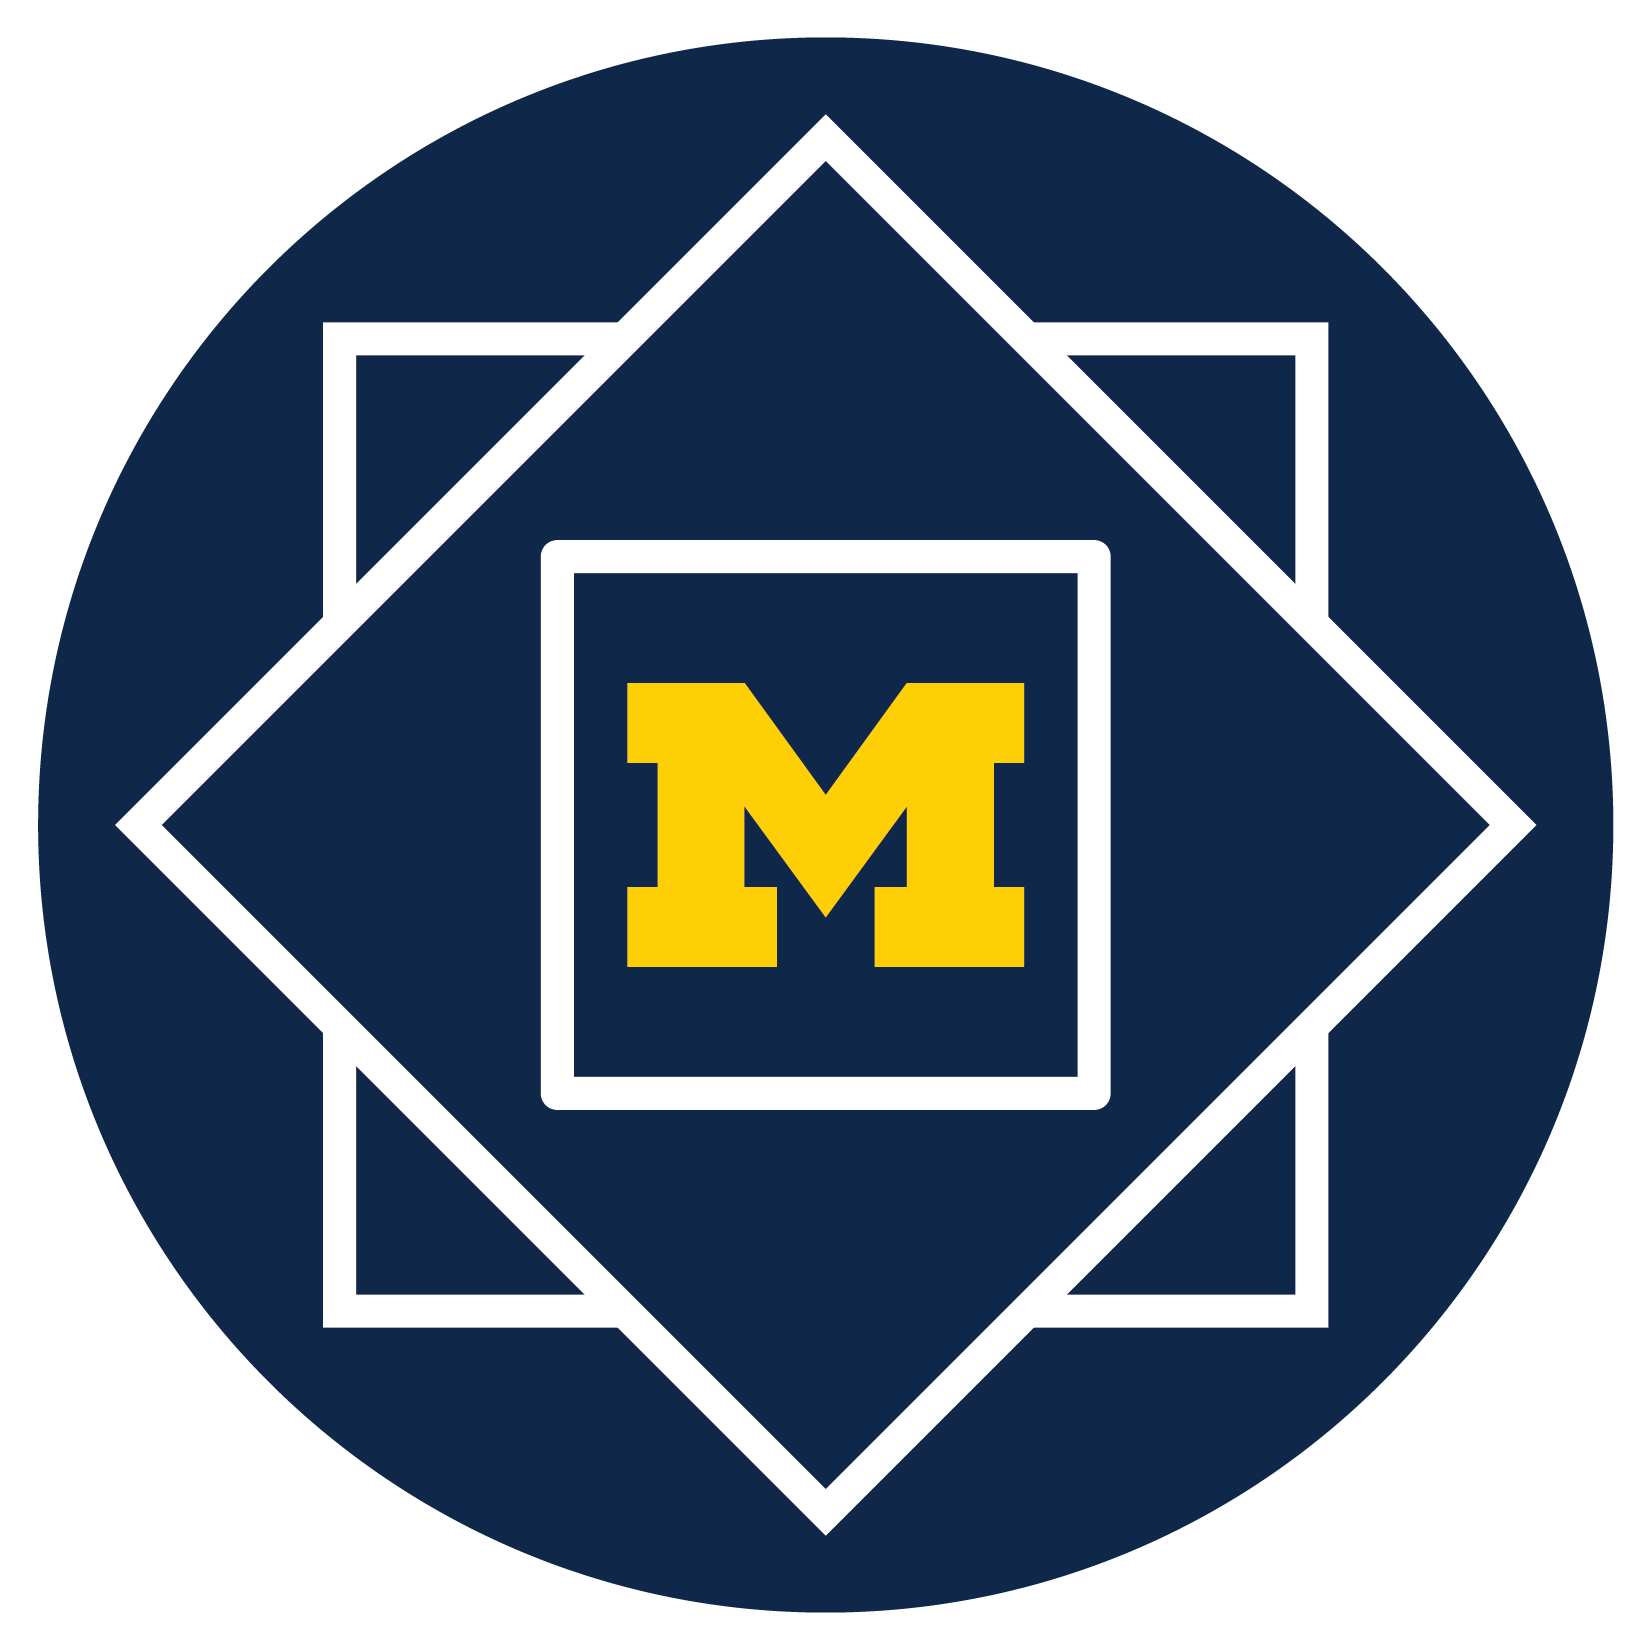 University of Michigan Alumni Relations logo